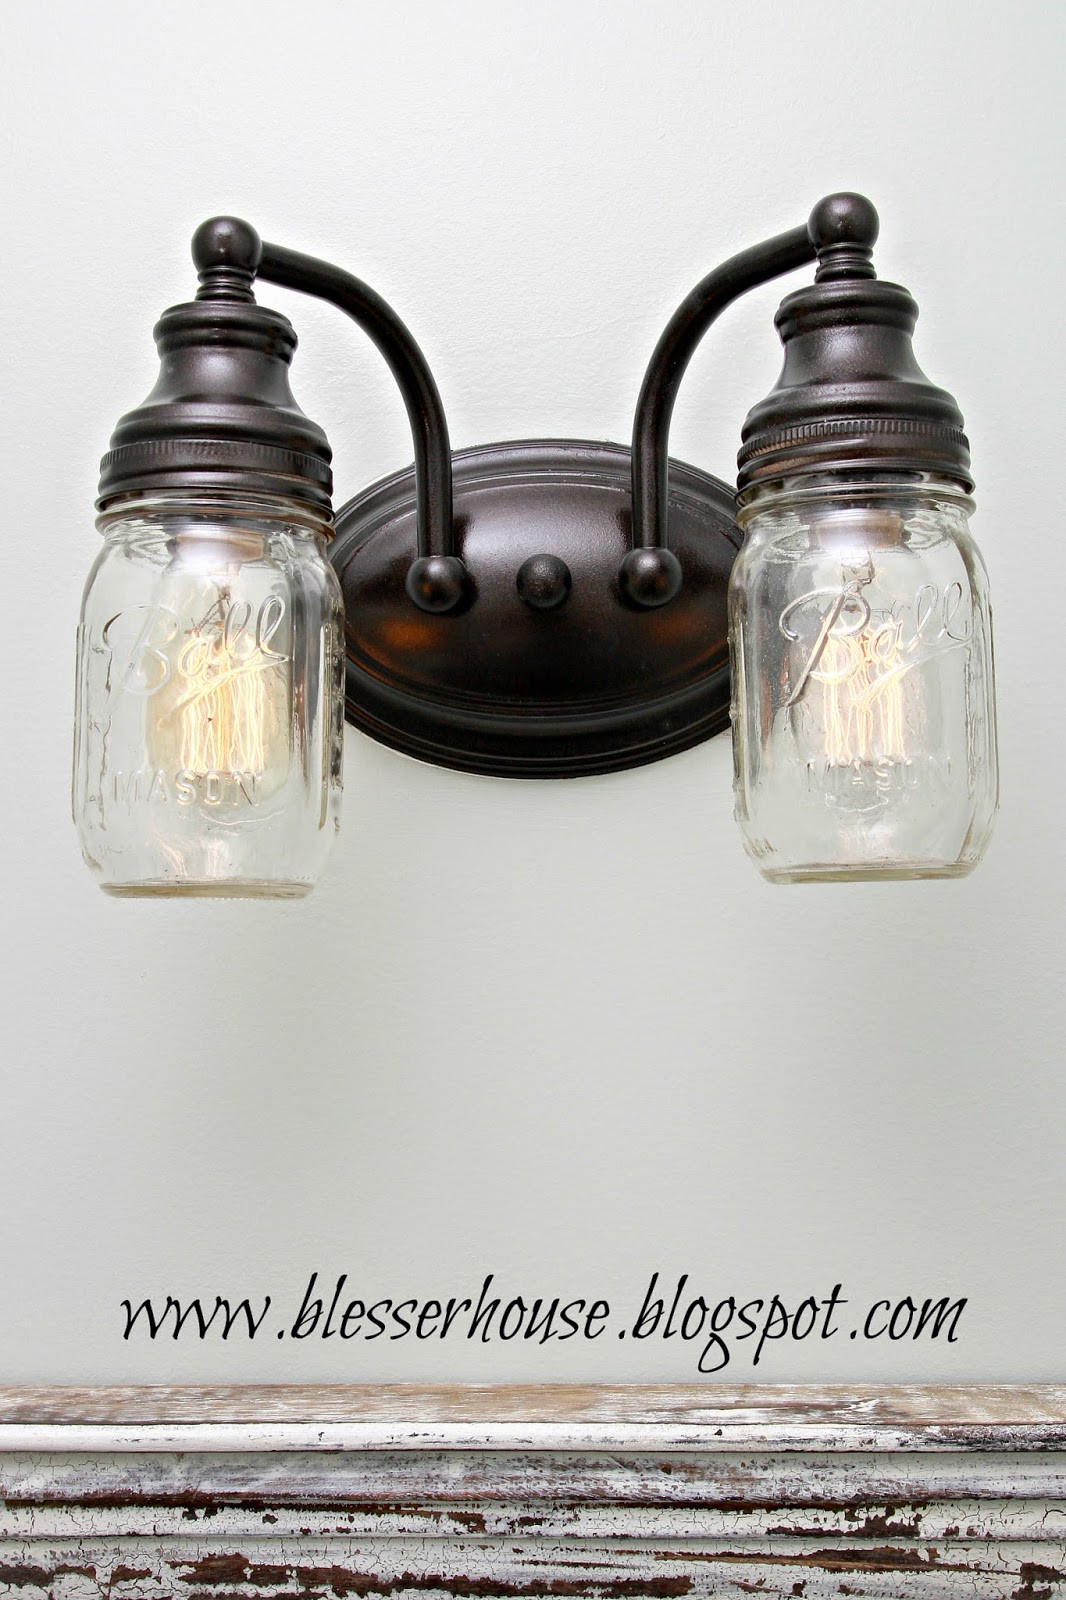 Best ideas about DIY Bathroom Light
. Save or Pin DIY Mason Jar Vanity Light Bless er House Now.